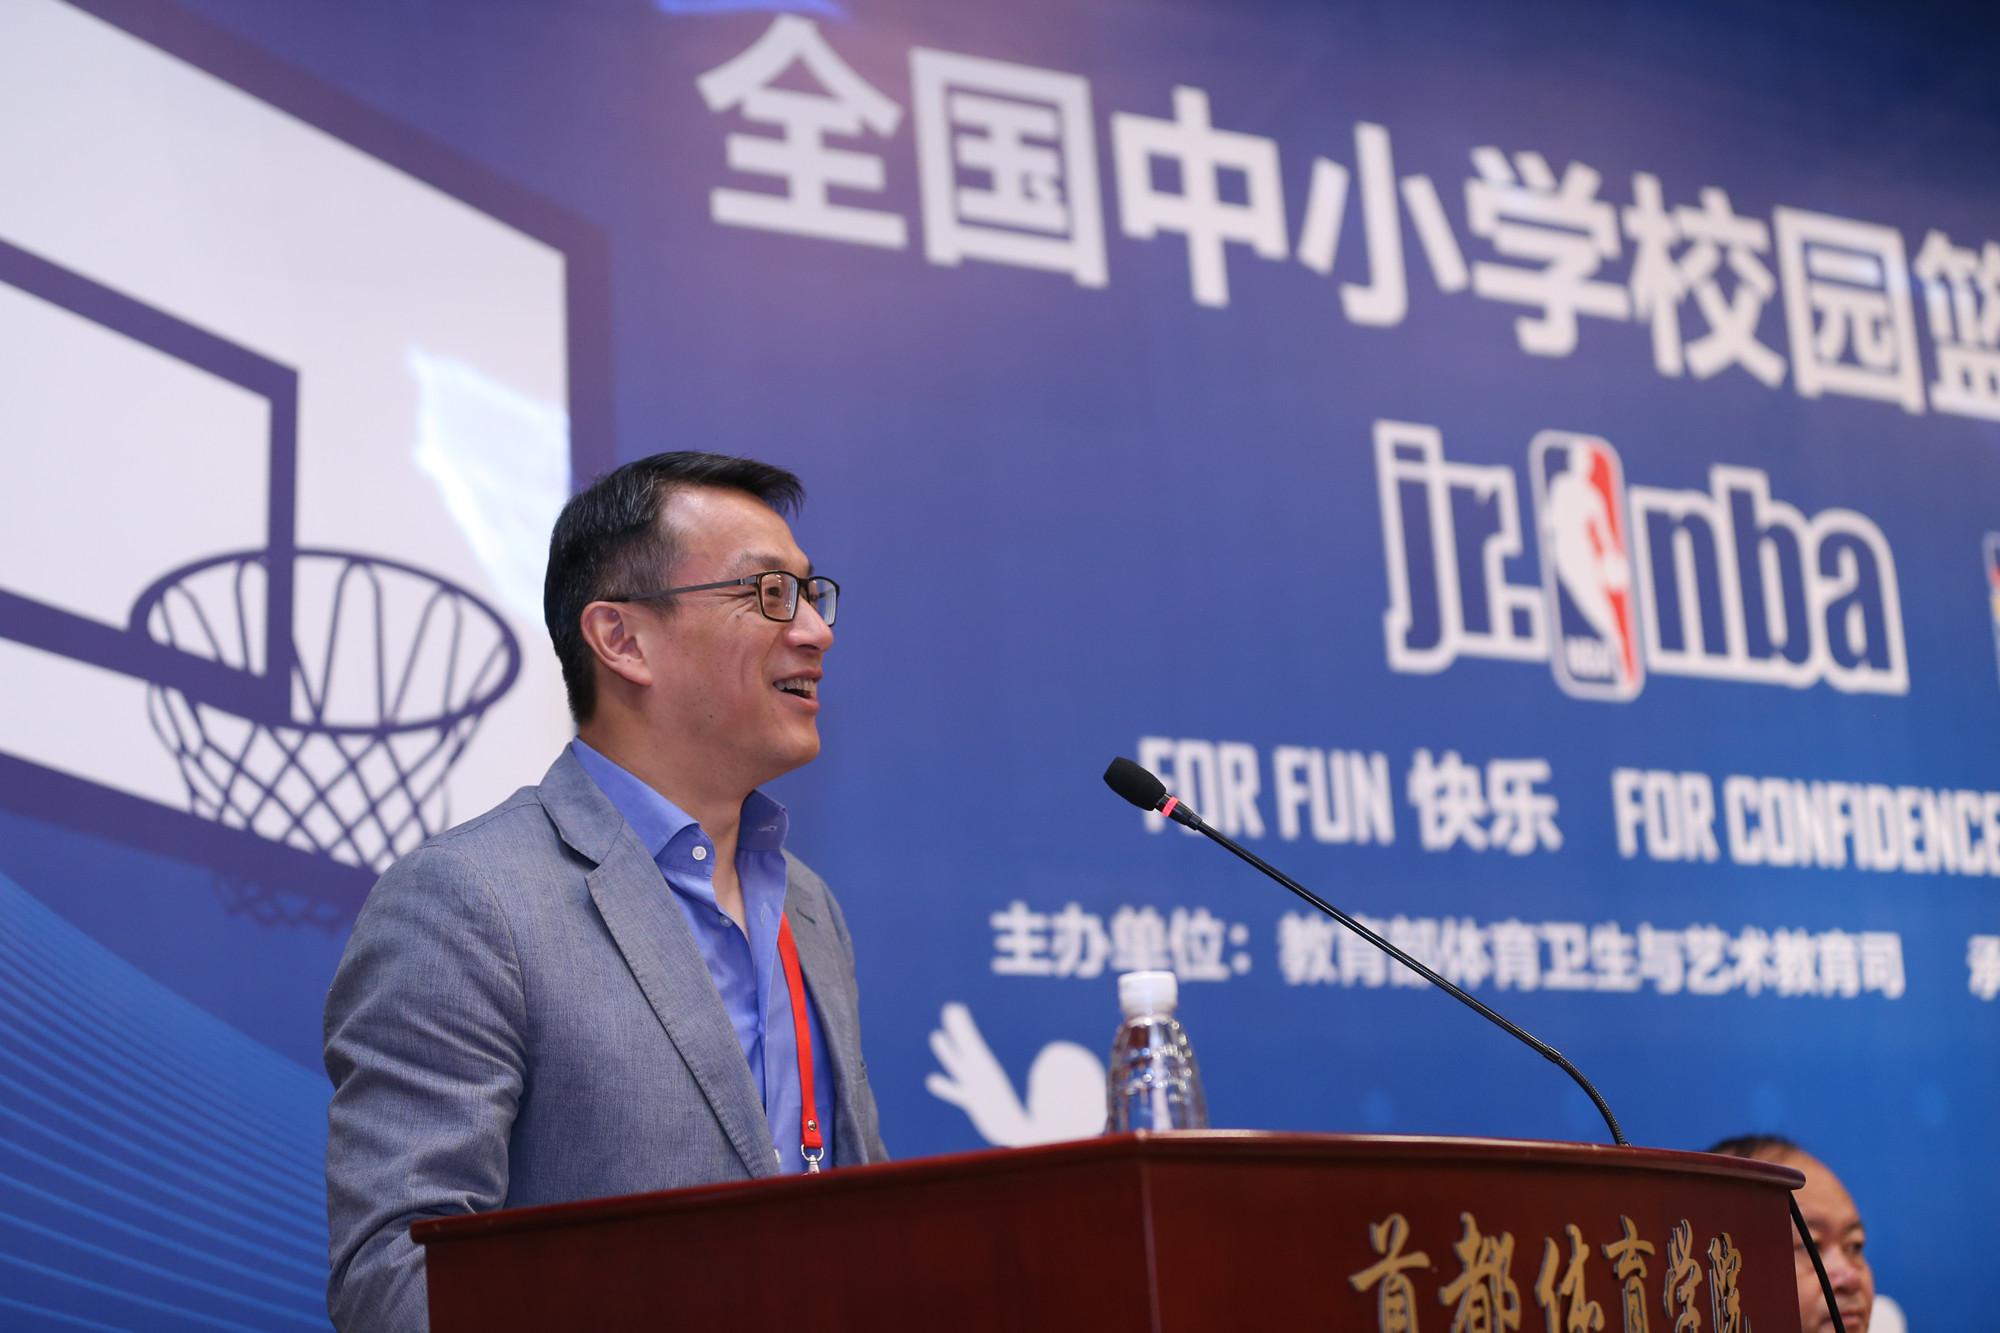 jr. nba 体育老师培训 NBA中国正式开启全国中小学体育老师培训项目(4)